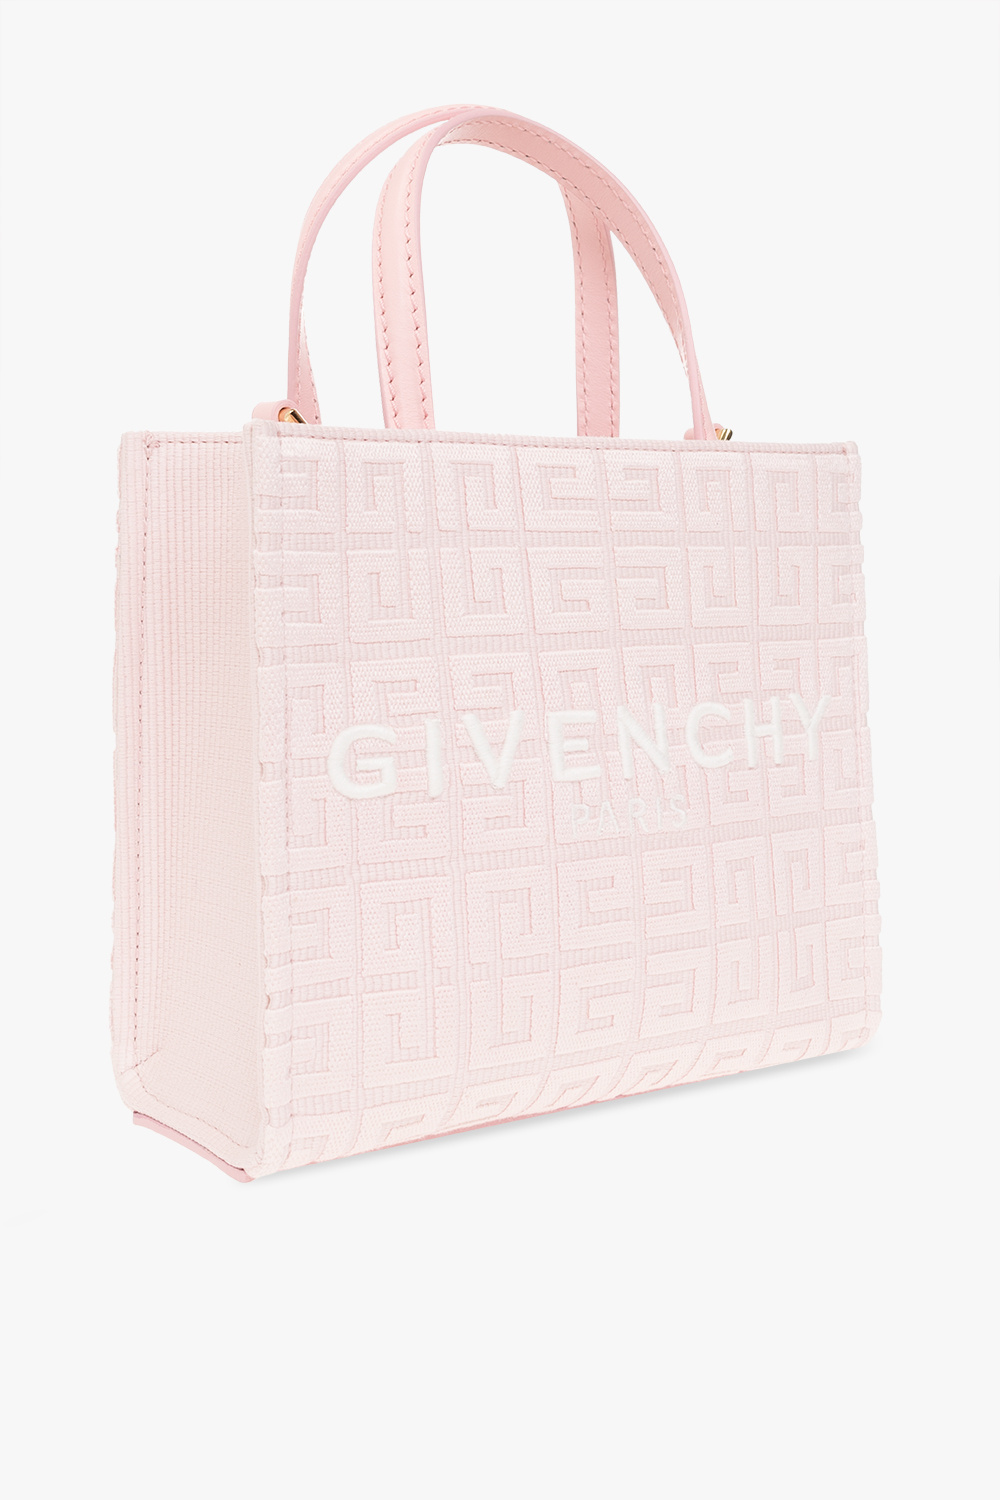 Givenchy ‘G Tote Mini’ shoulder bag